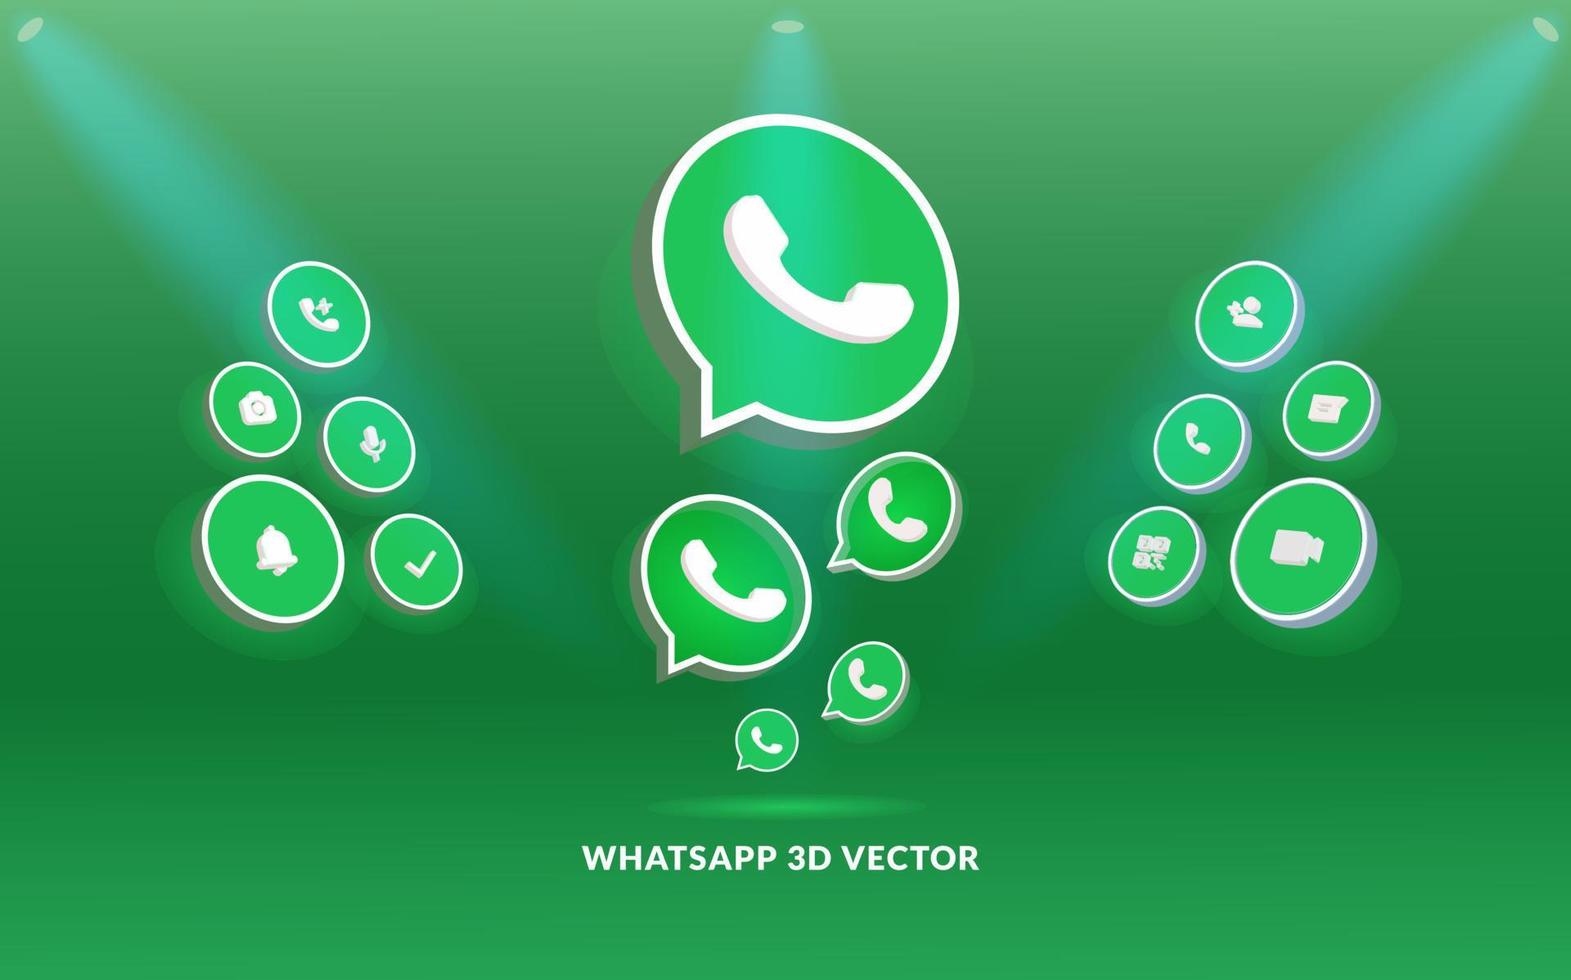 WhatsApp-Logo und -Symbol im 3D-Vektorstil vektor